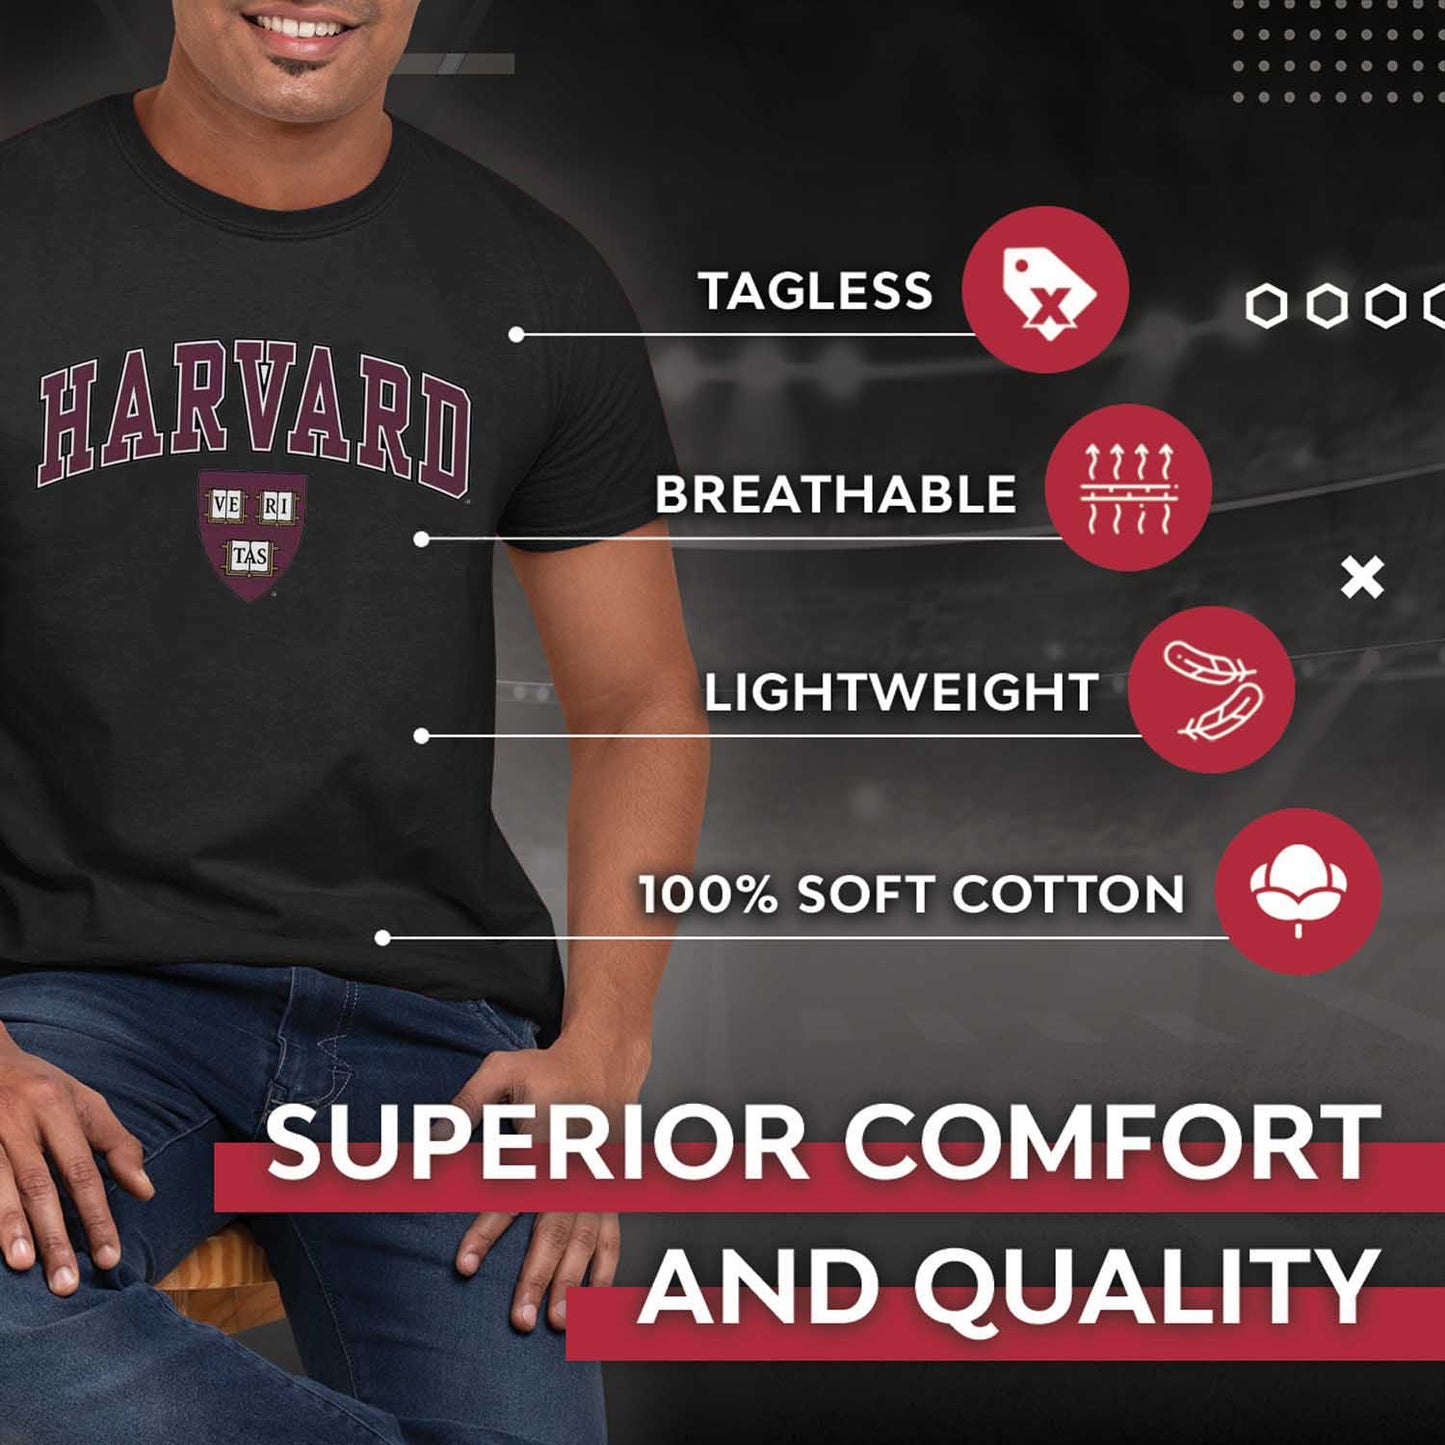 Harvard Crimson NCAA Adult Gameday Cotton T-Shirt - Black